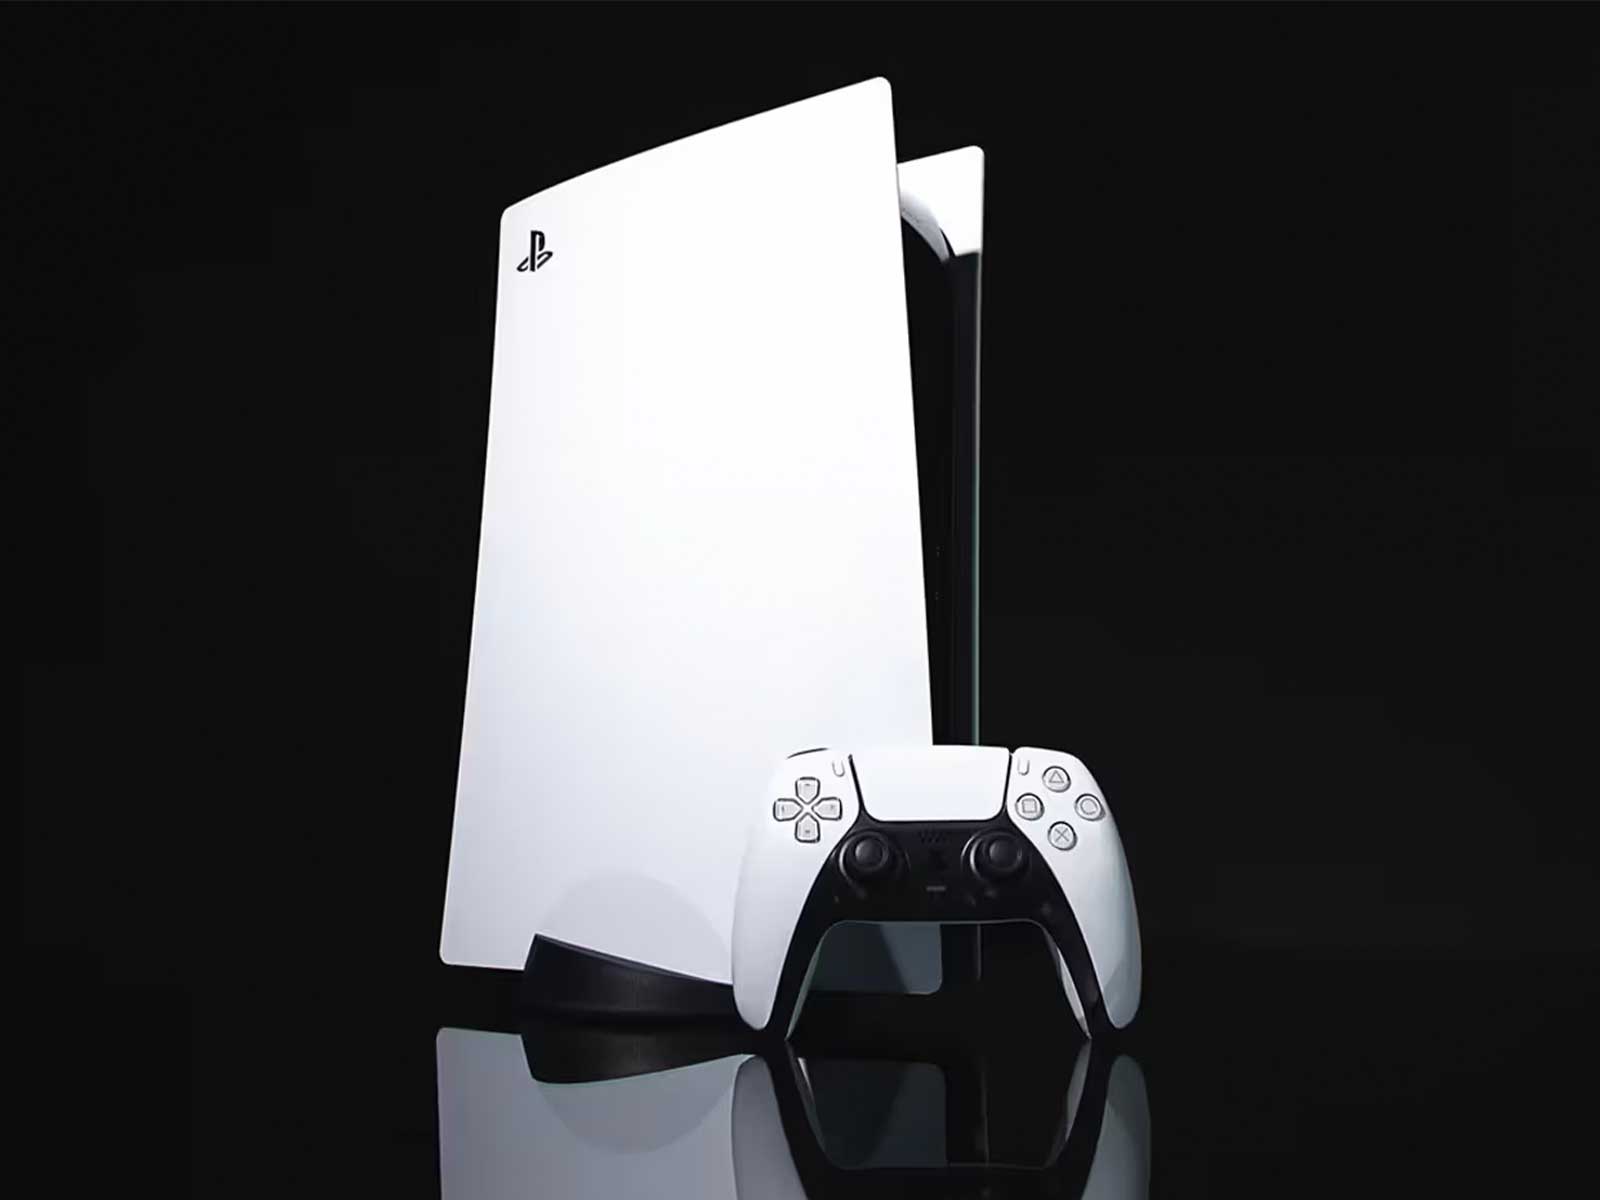 PlayStation 5 Slim release date leaks online